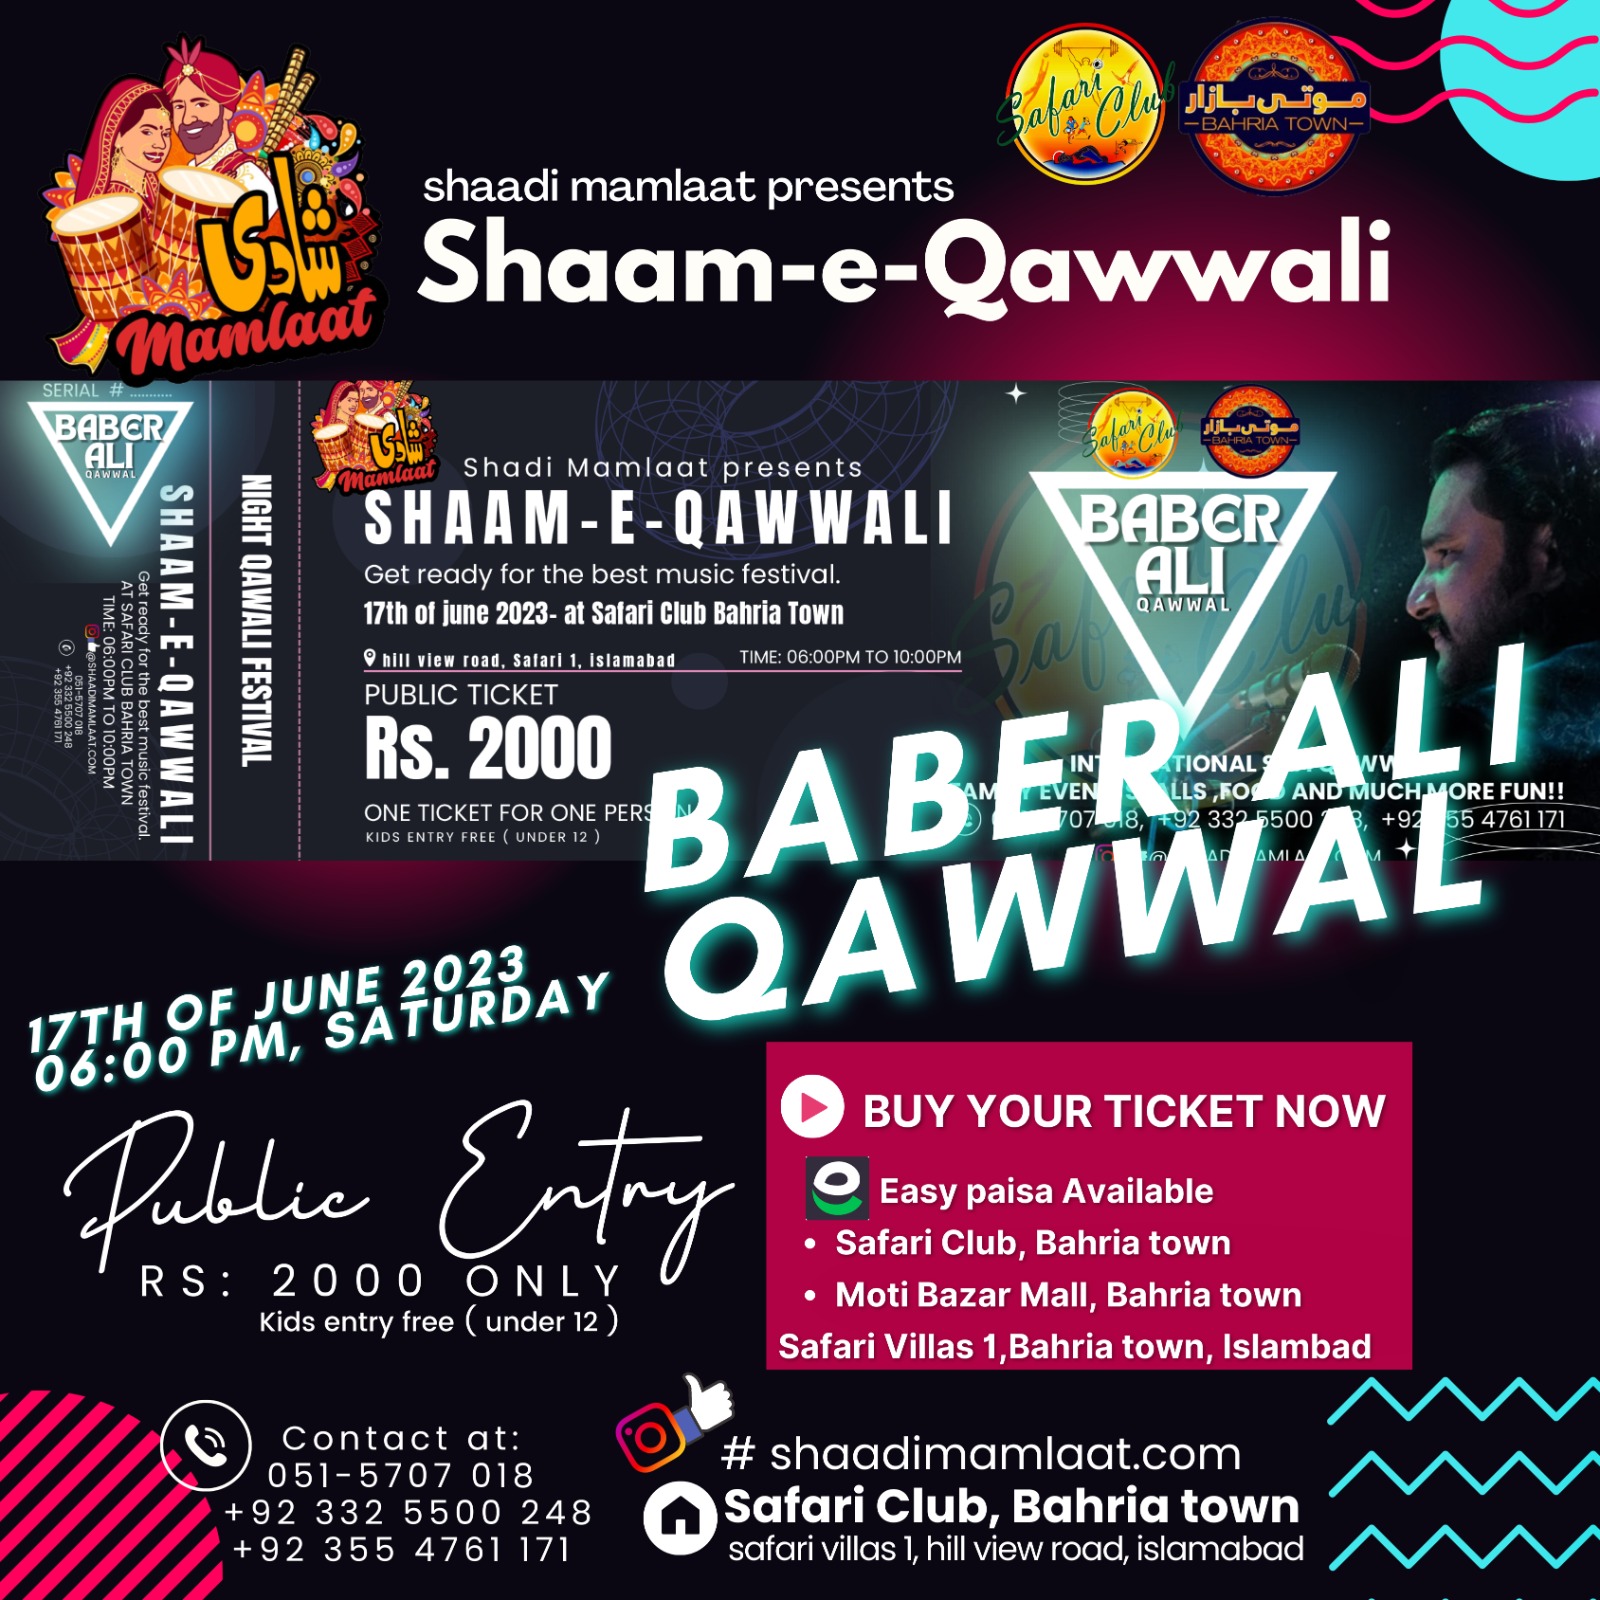 Experience the Enchantment: Shaam-e-Qawwali by SHAADI MAMLAAT on June 17